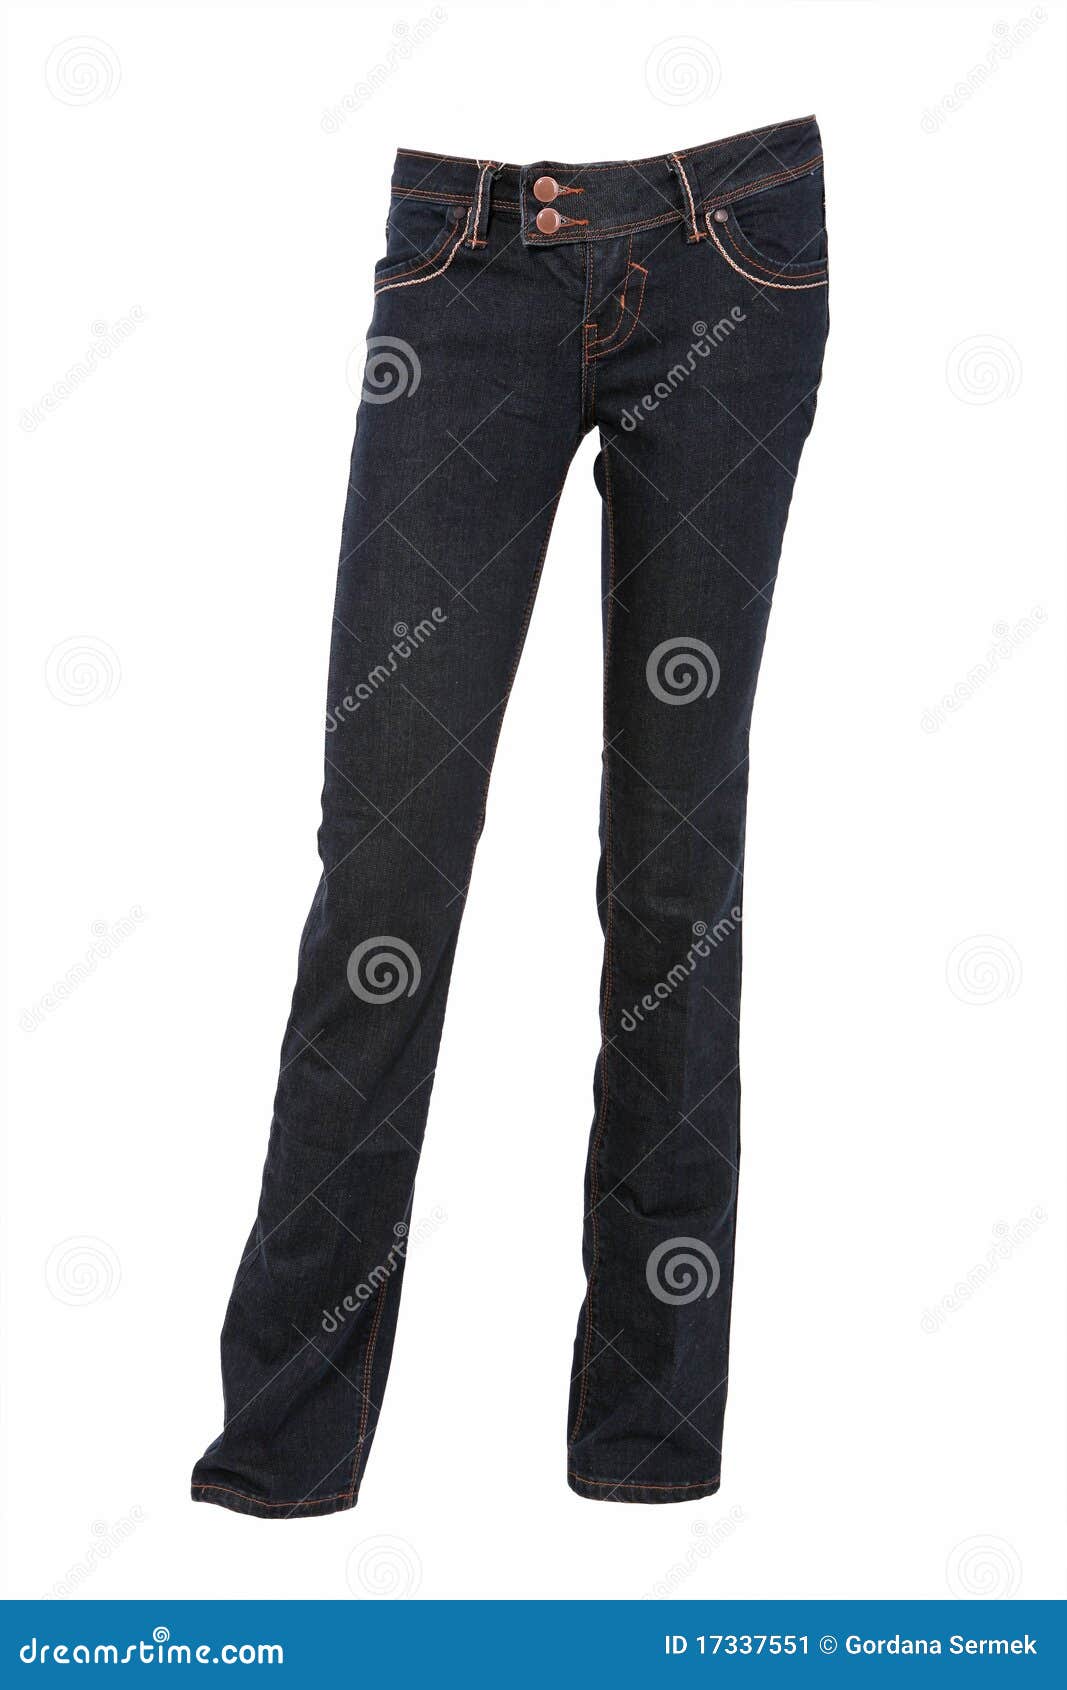 Denim trousers stock image. Image of elegant, apparel - 17337551